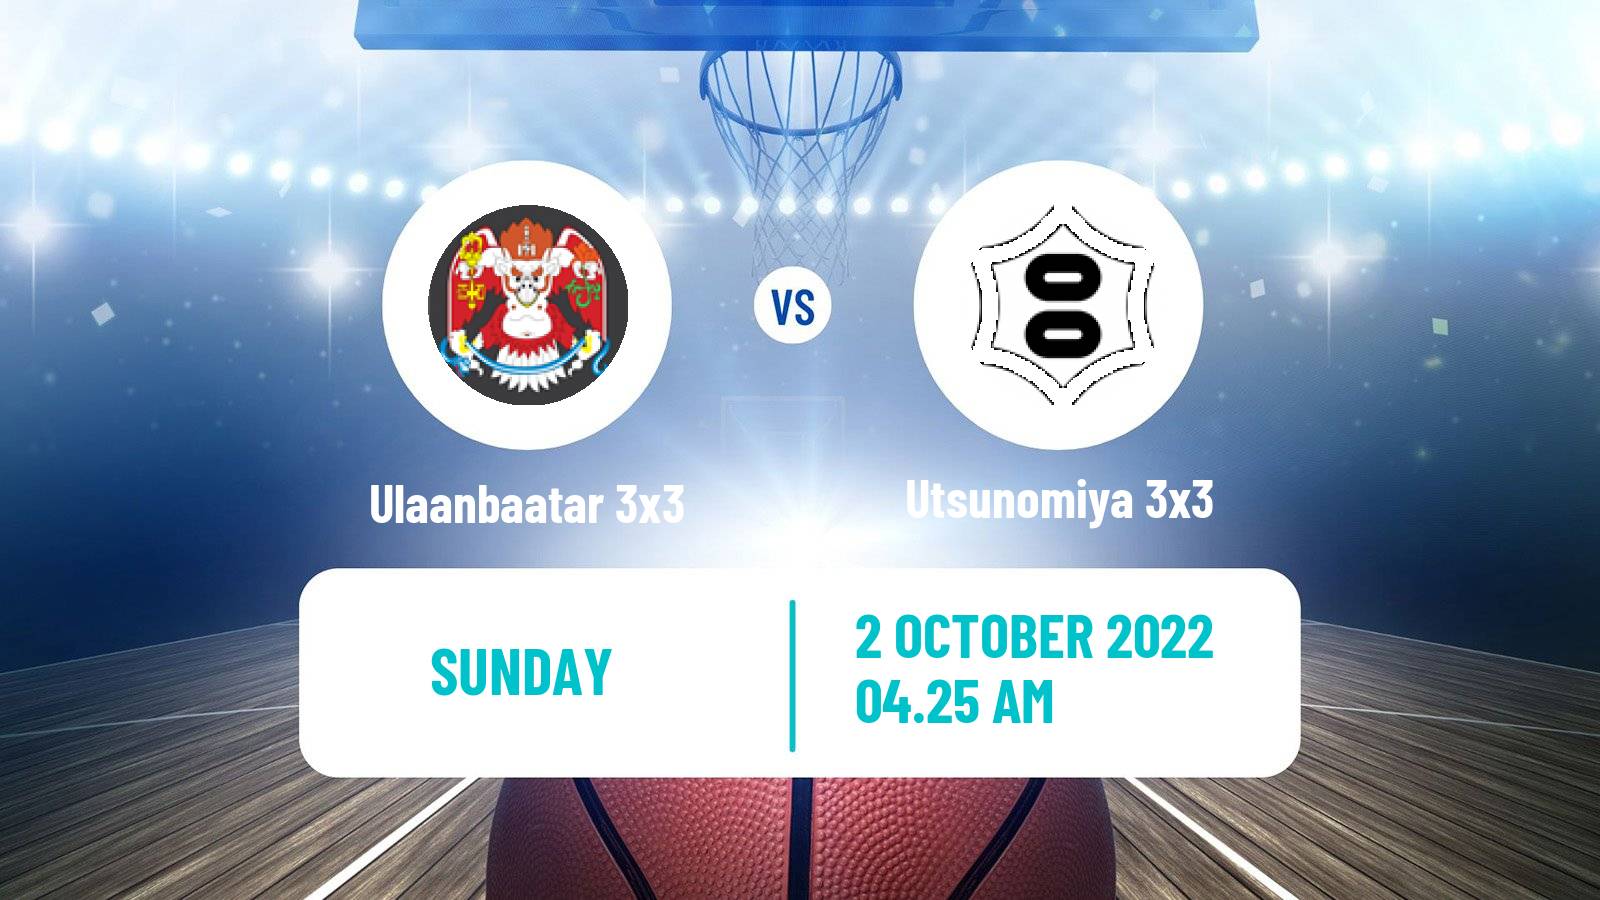 Basketball World Tour Сebu 3x3 Ulaanbaatar 3x3 - Utsunomiya 3x3